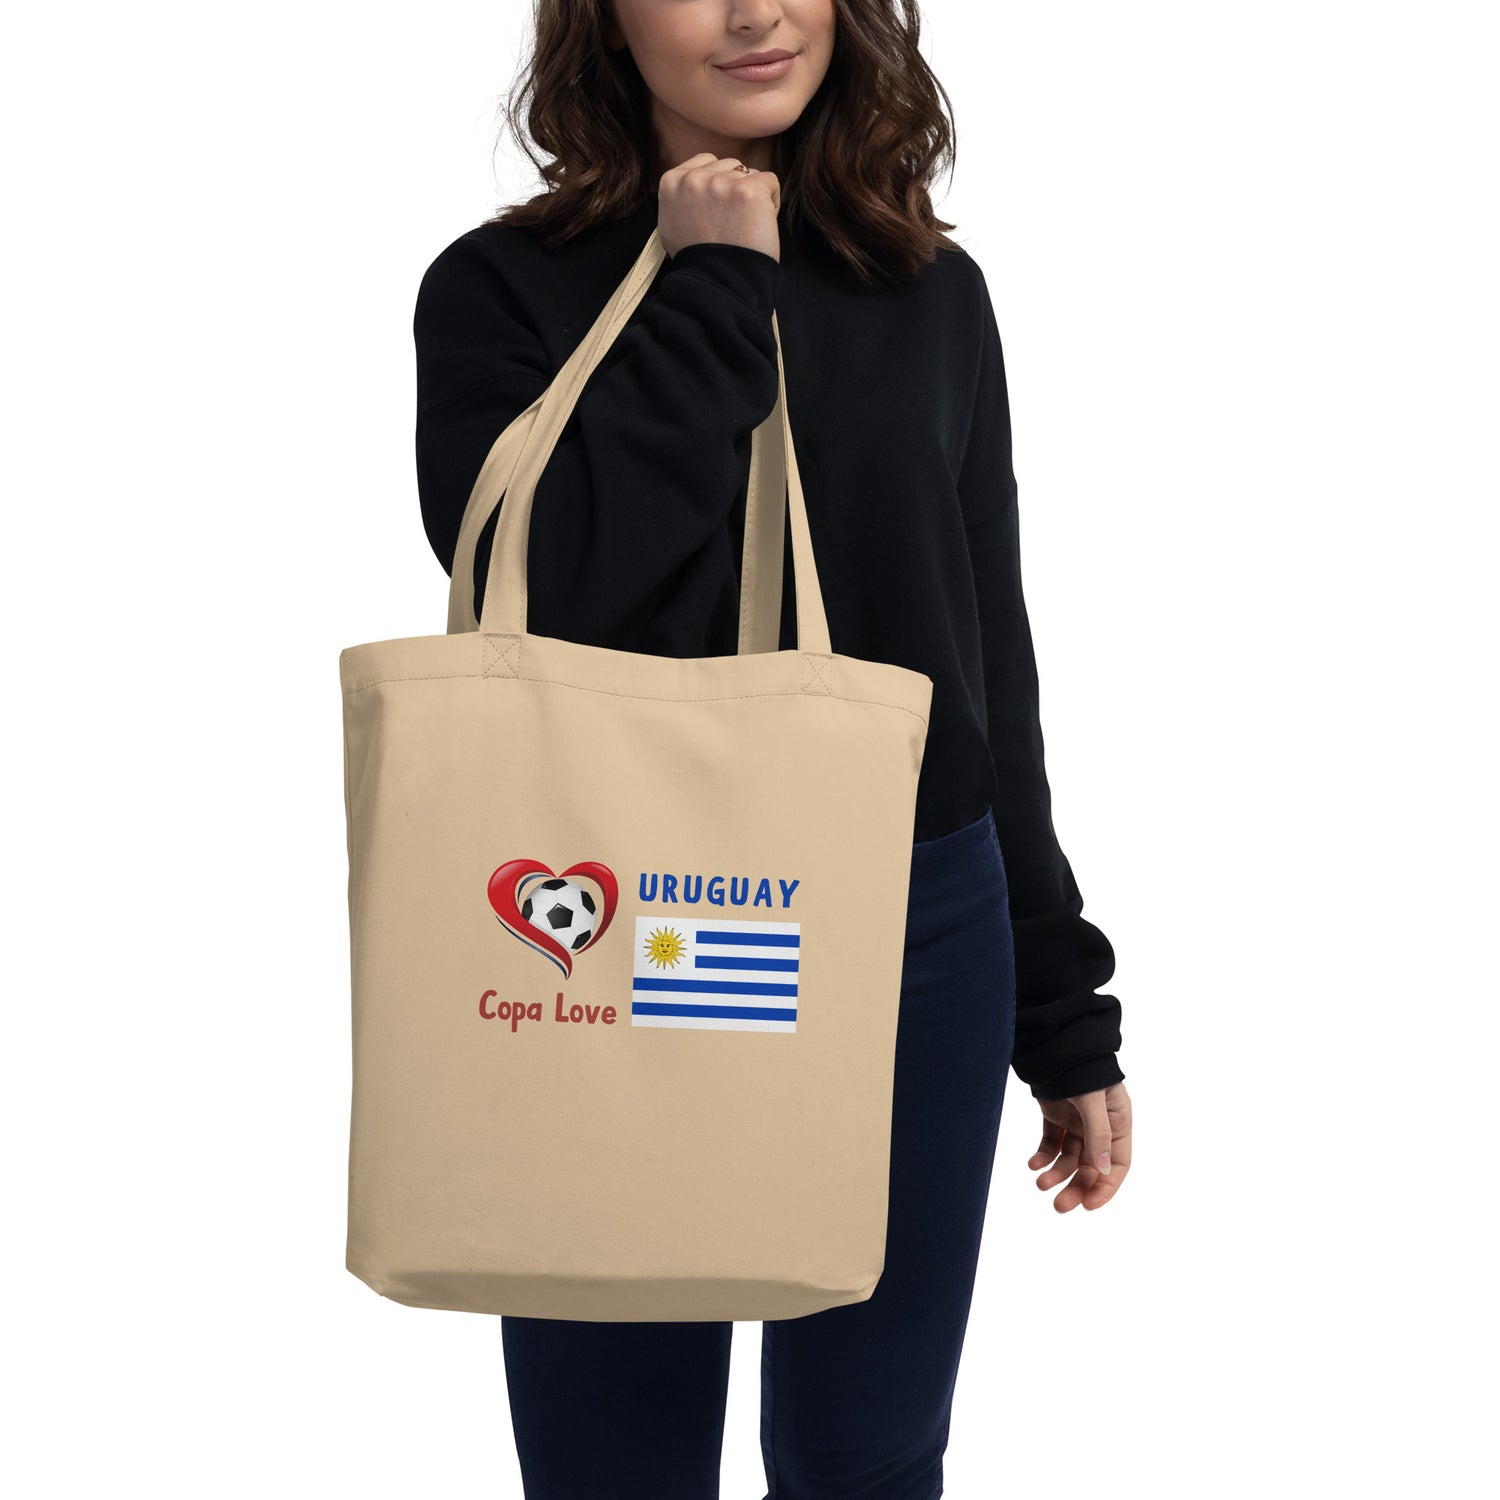 URUGUAY - Copa Love Eco Tote Bag